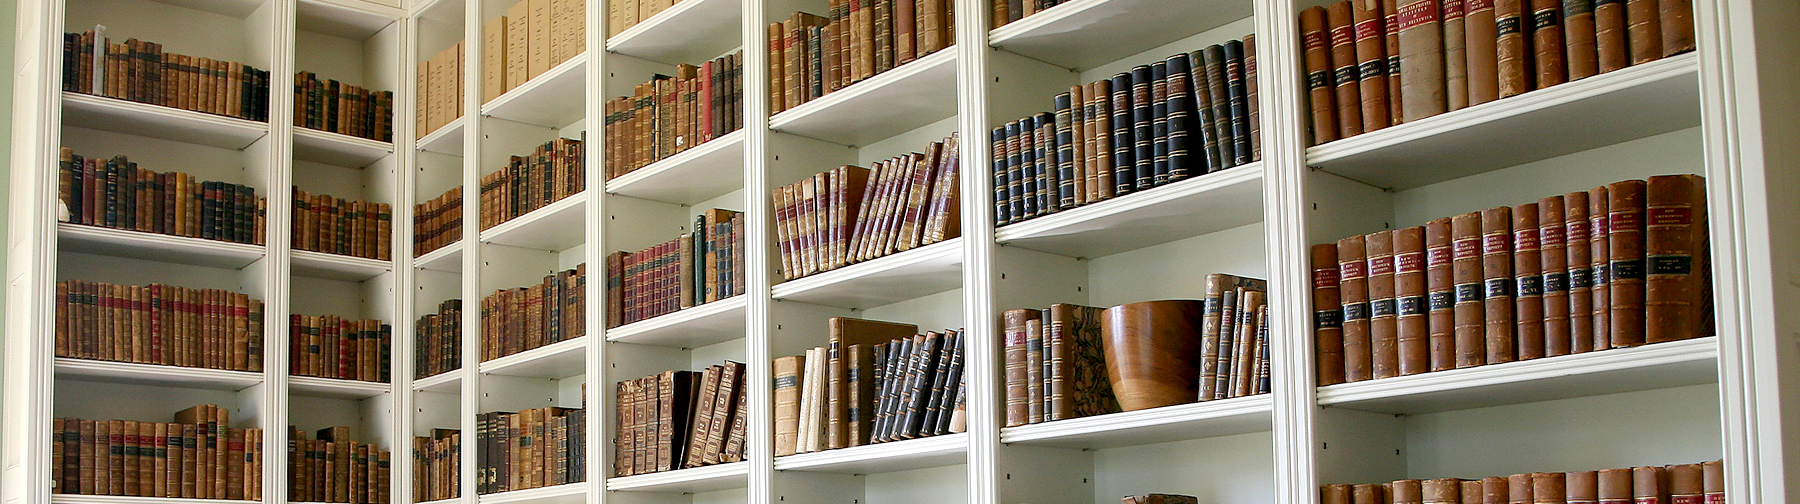 Decorative image of bookshelves